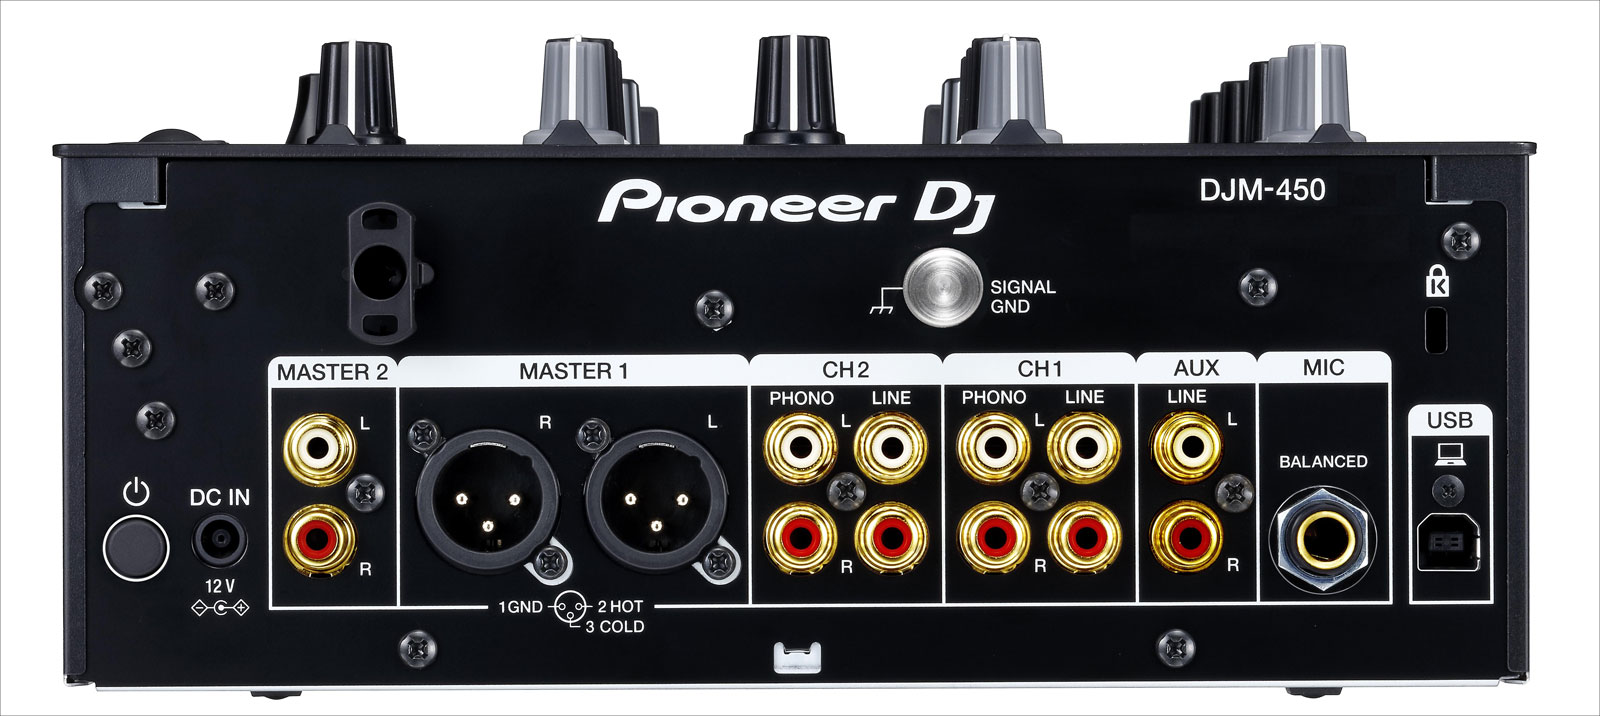 PIONEER DJ DJM-450 | Woodbrass.com